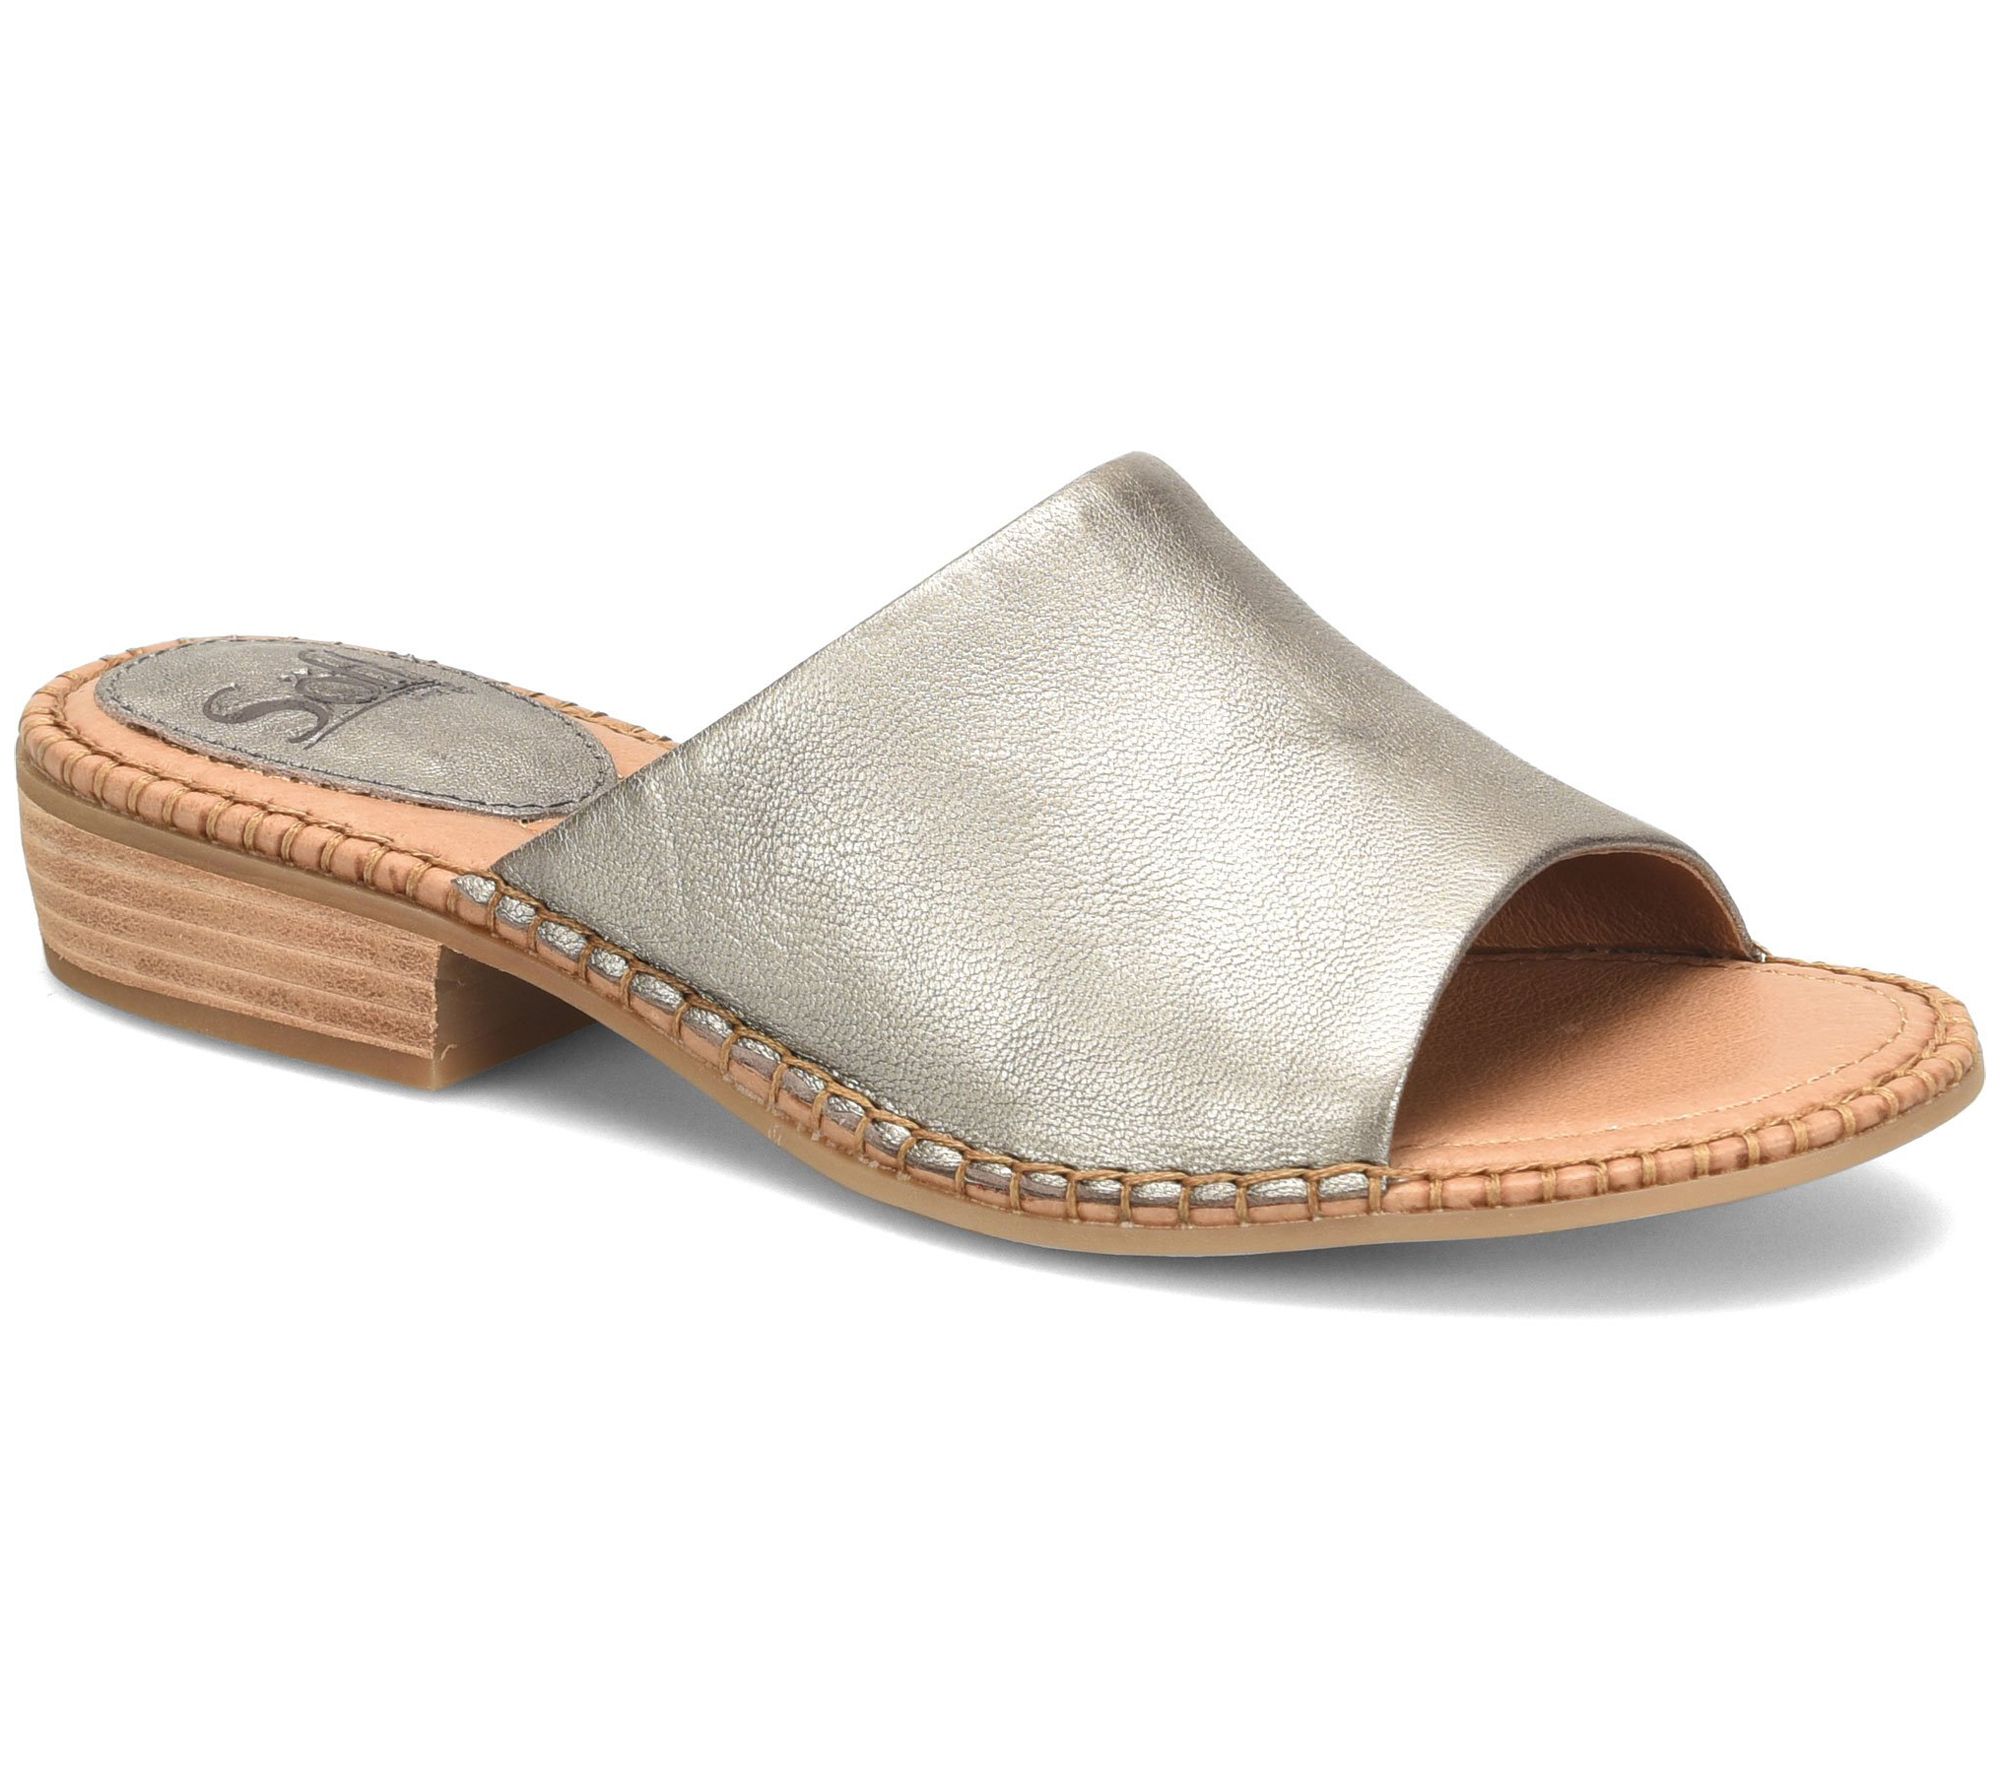 Sofft Slip-On Leather Sandals - Nalanie - QVC.com